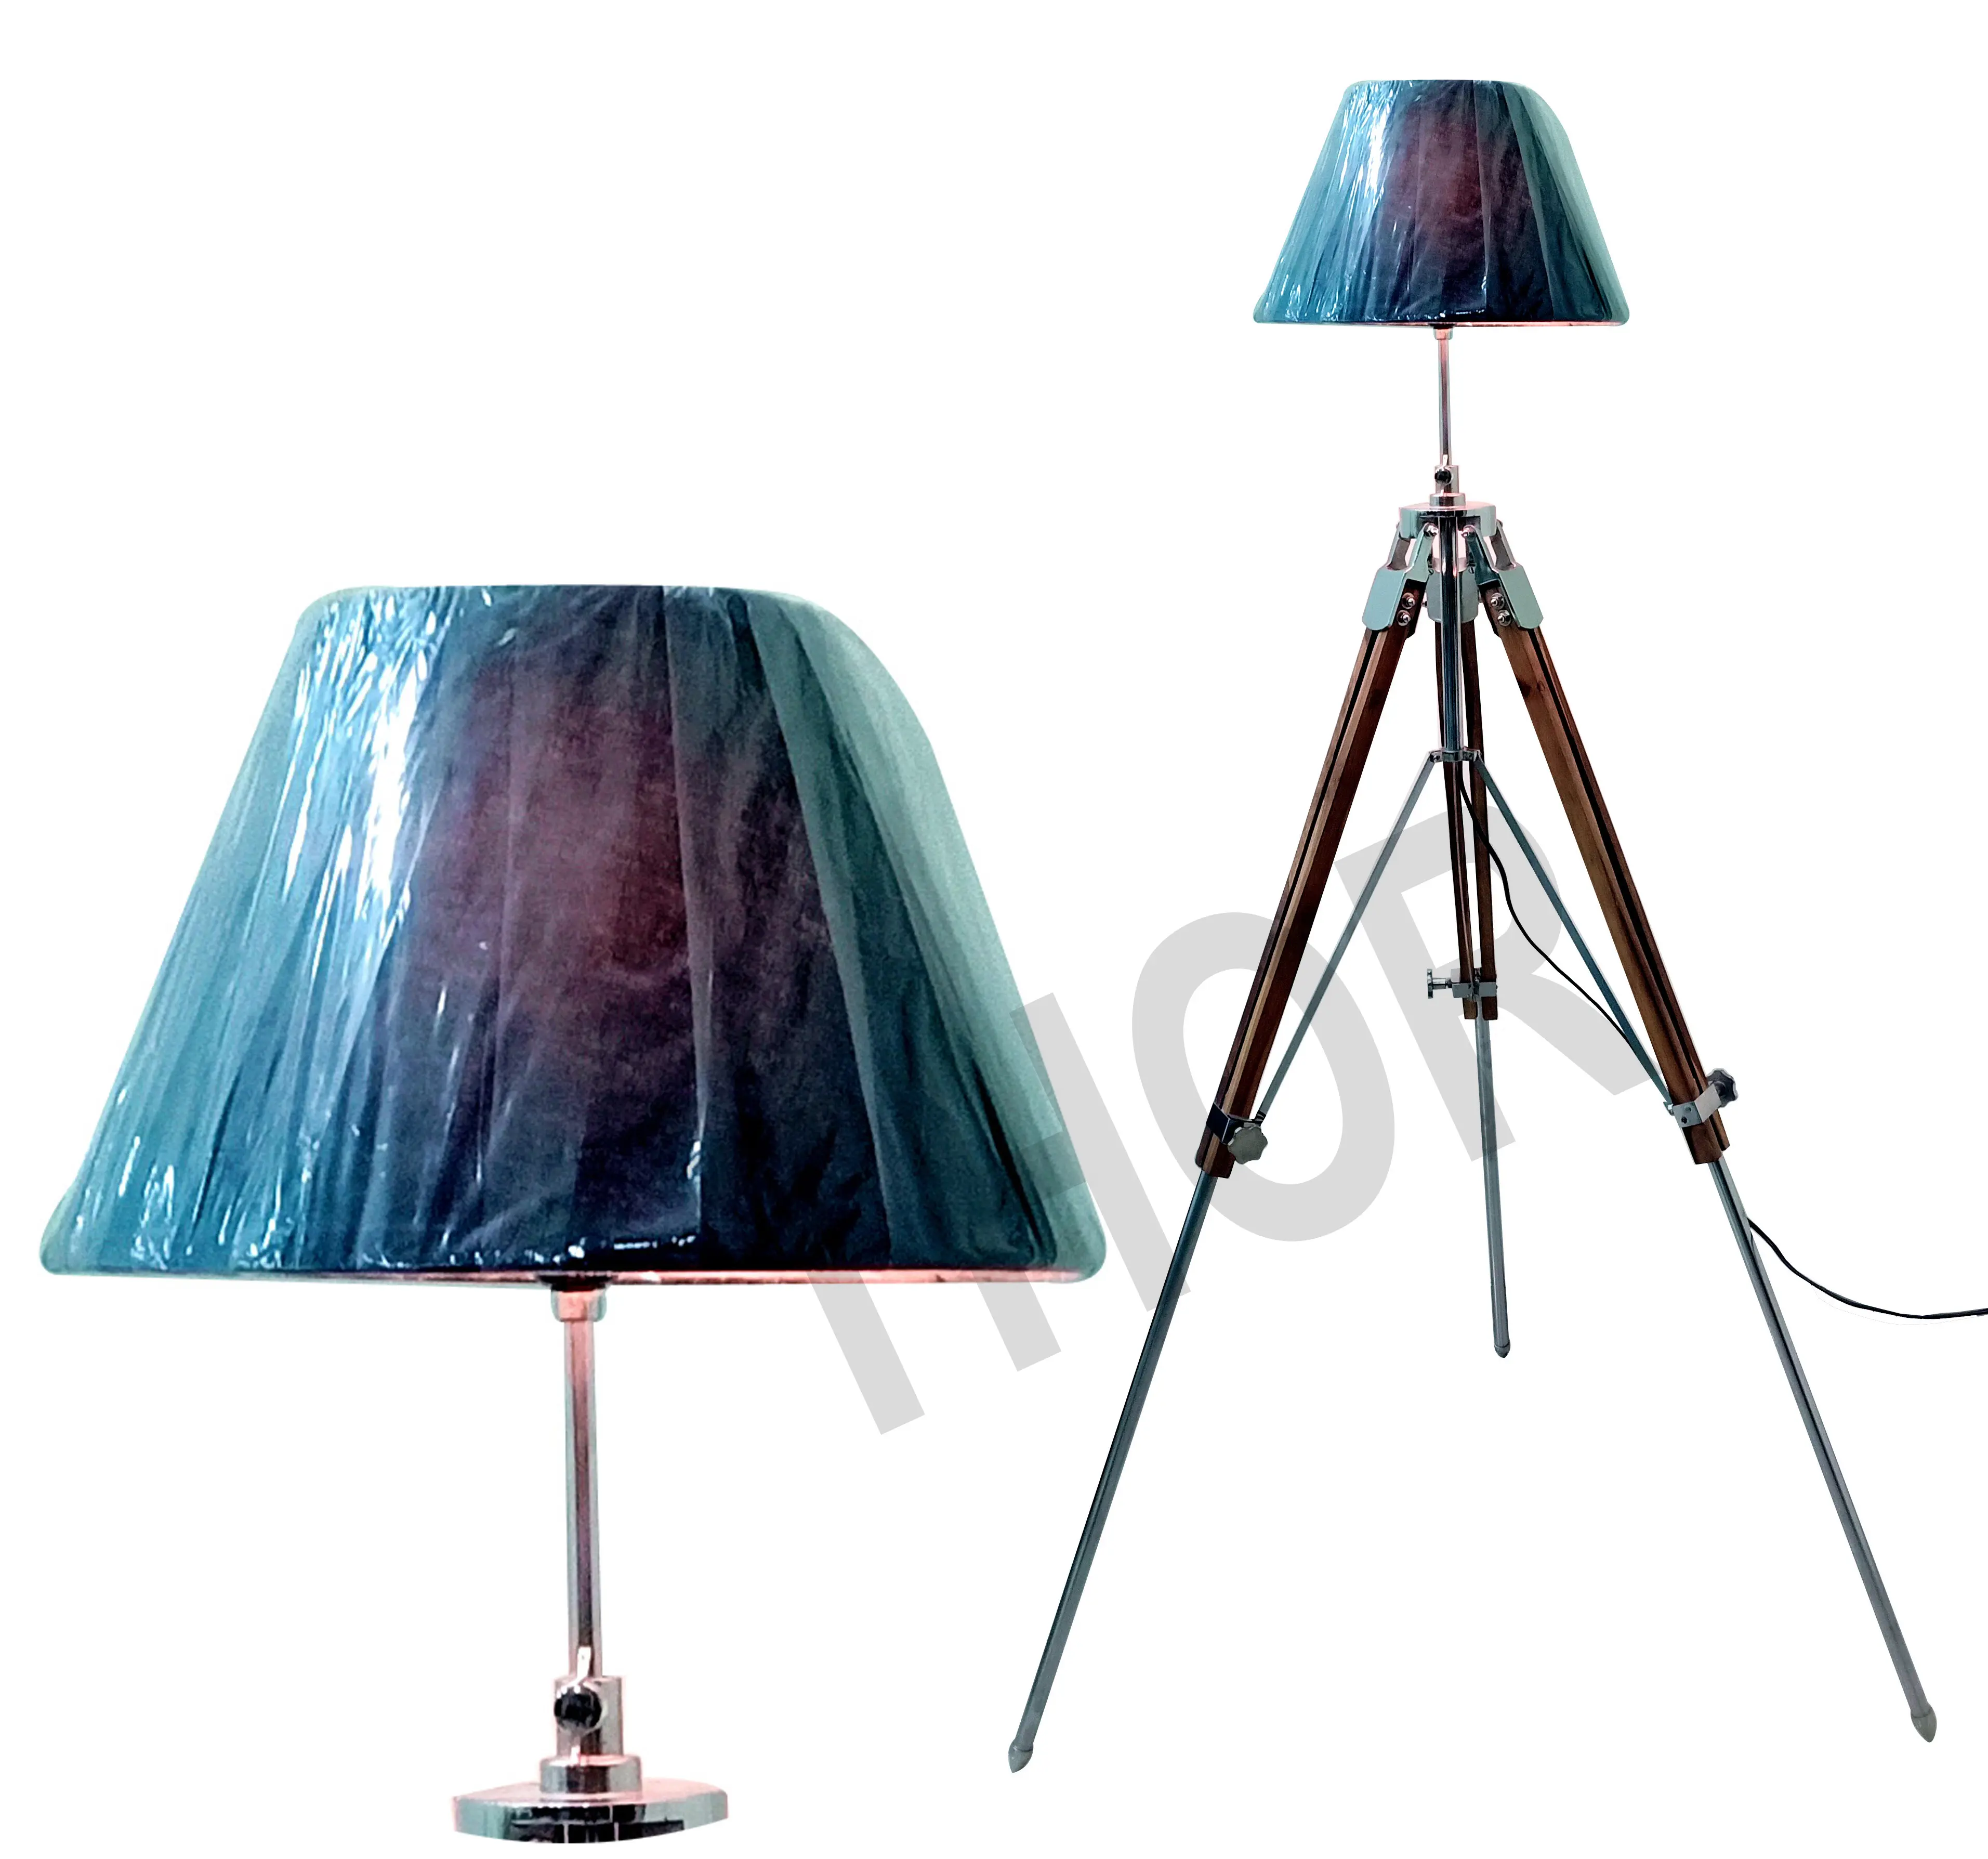 Vintage Classic Wood Tripod Floor Lamp Designer Decor Marine Tripod Floor Lamp Home Decorative